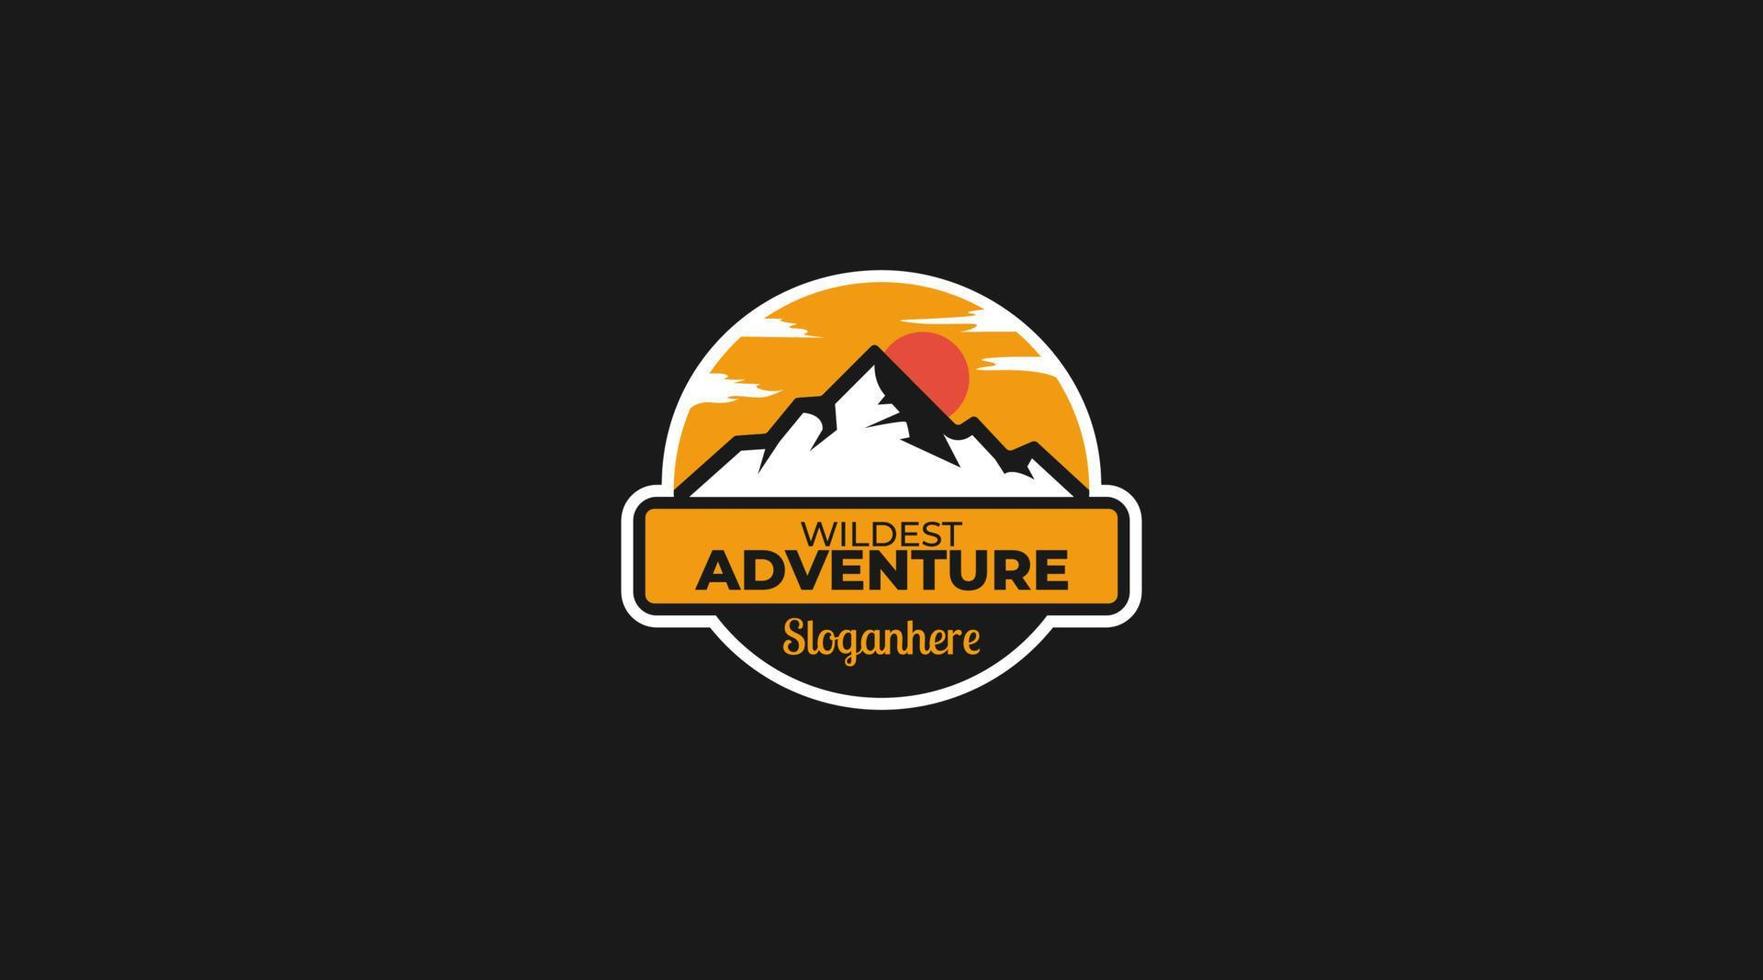 Wildest adventure logo design vector illustration